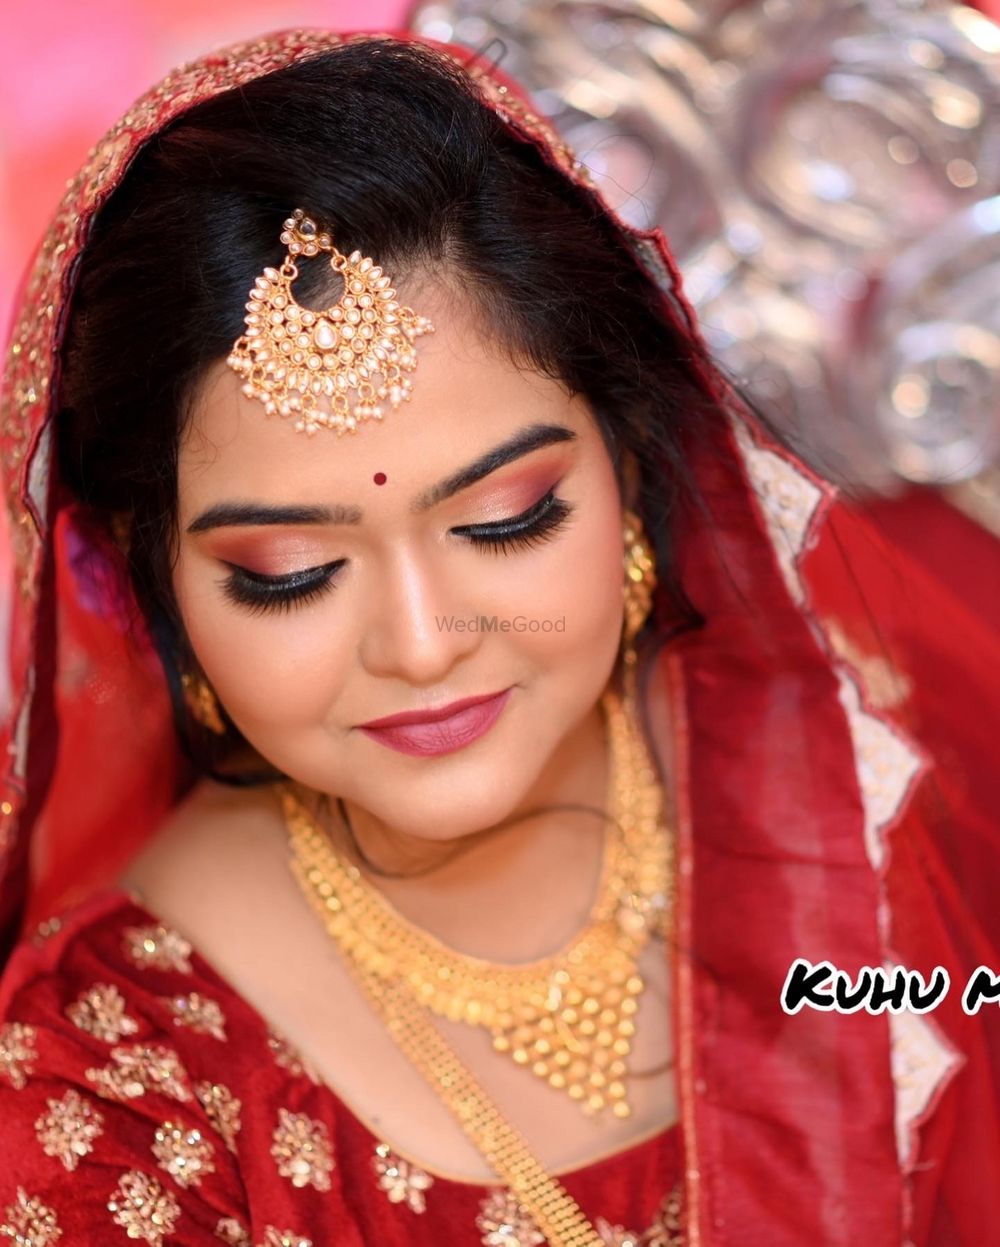 Photo By Kuhu Makeup Studio - Brushed by Shalini - Bridal Makeup